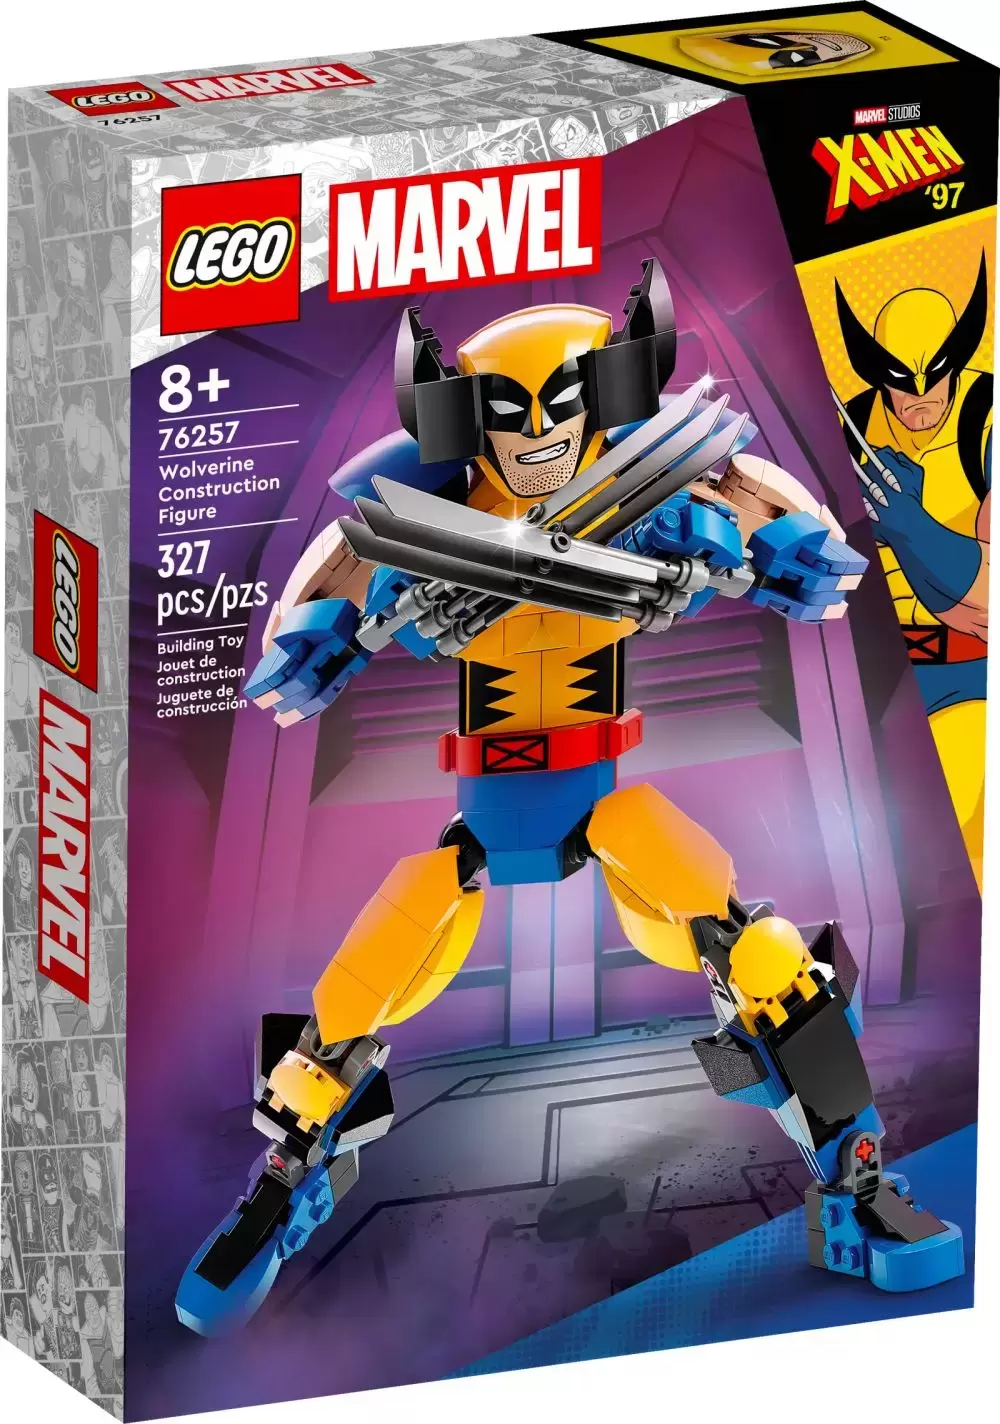 LEGO MARVEL Super Heroes - Wolverine Construction Figure